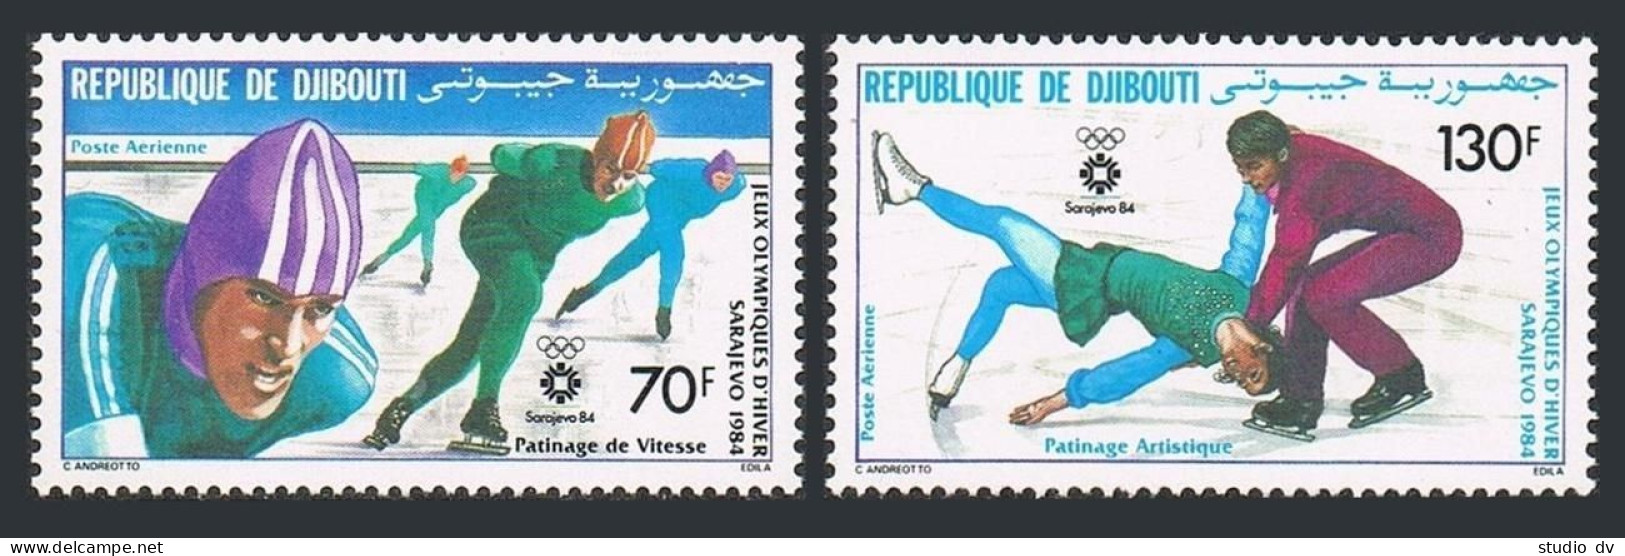 Djibouti C190-C191, MNH. Michel 392-393. Olympics Sarajevo-1984. Skating. - Djibouti (1977-...)